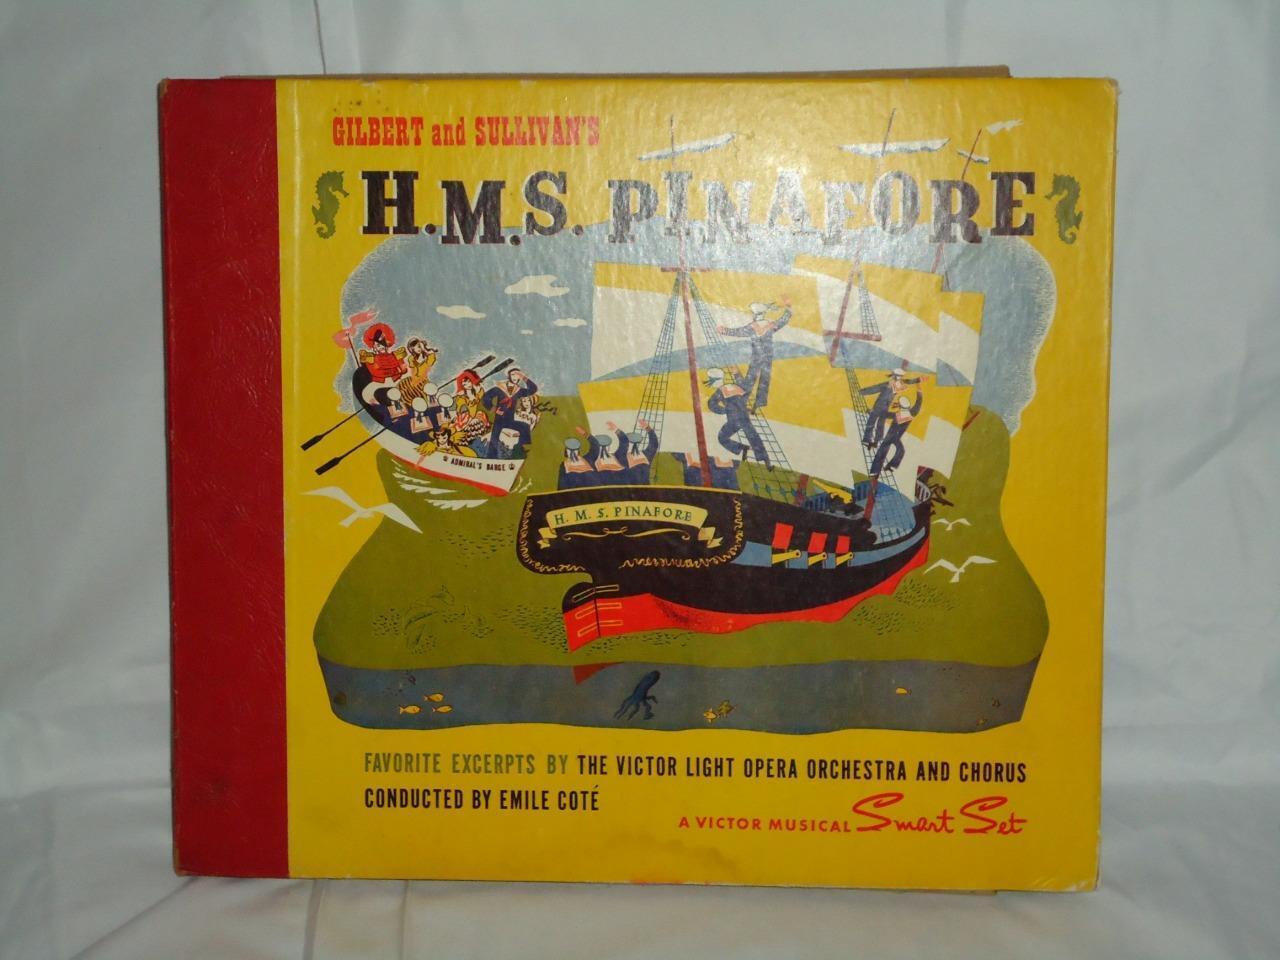 GILBERT AND SULLIVANS HMS PINAFORE VICTOR MUSICAL SMART SET RECORDS VINYL LP SET